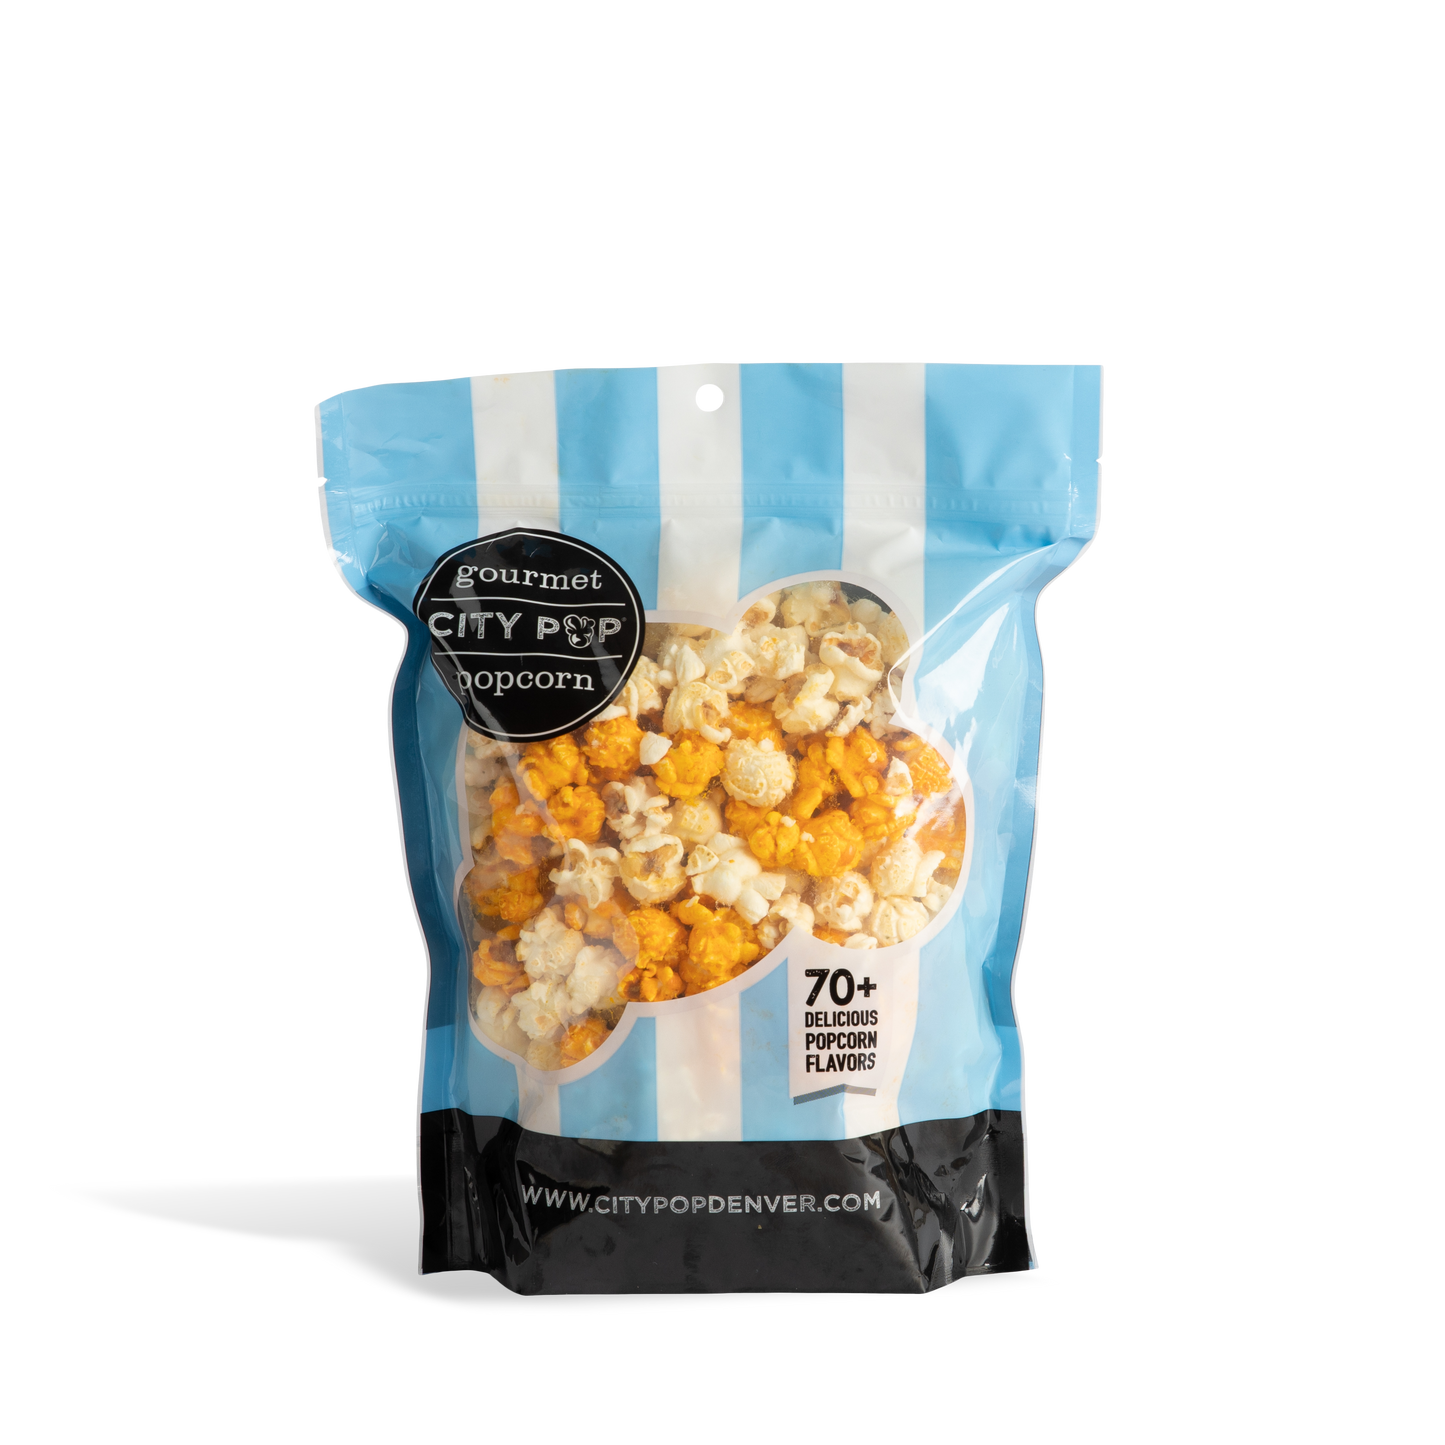 City Pop Caramel Popcorn Bag